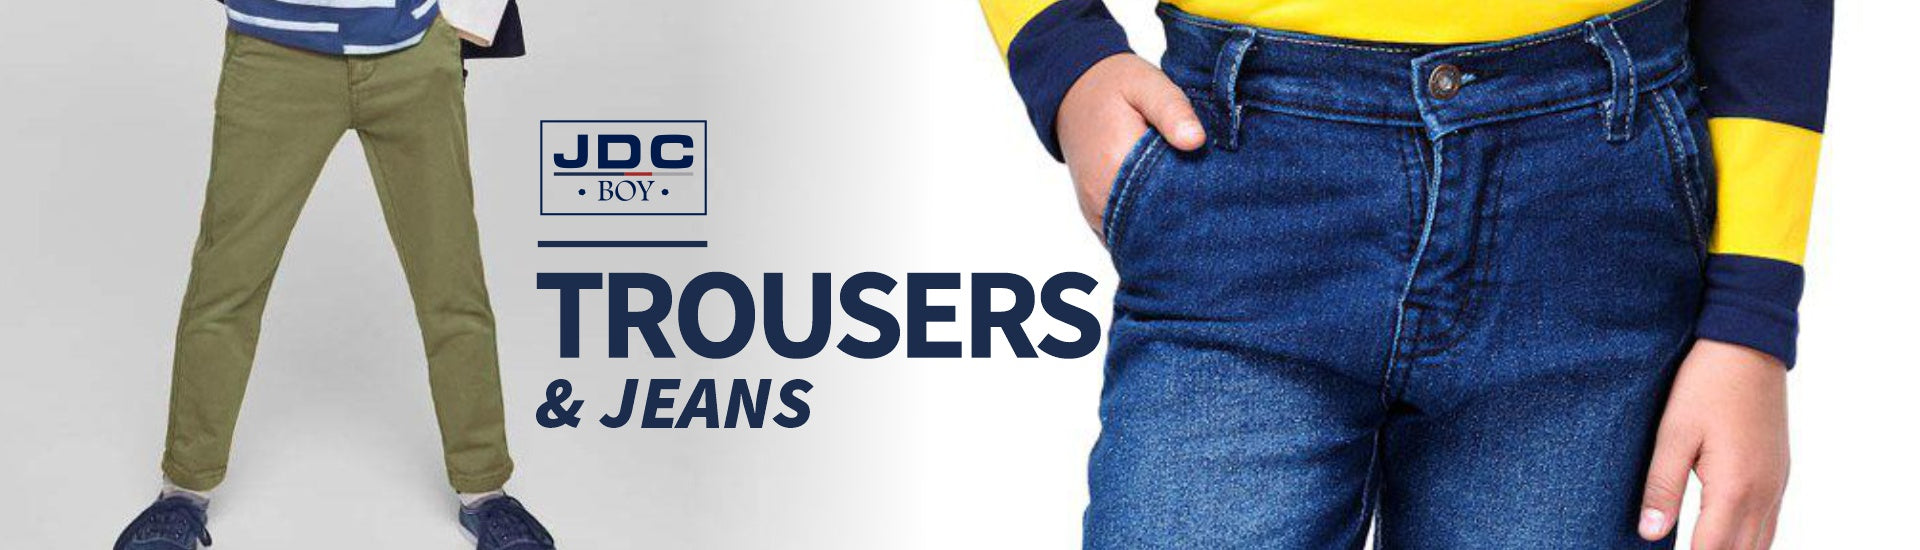 Boy's Trousers & Jeans